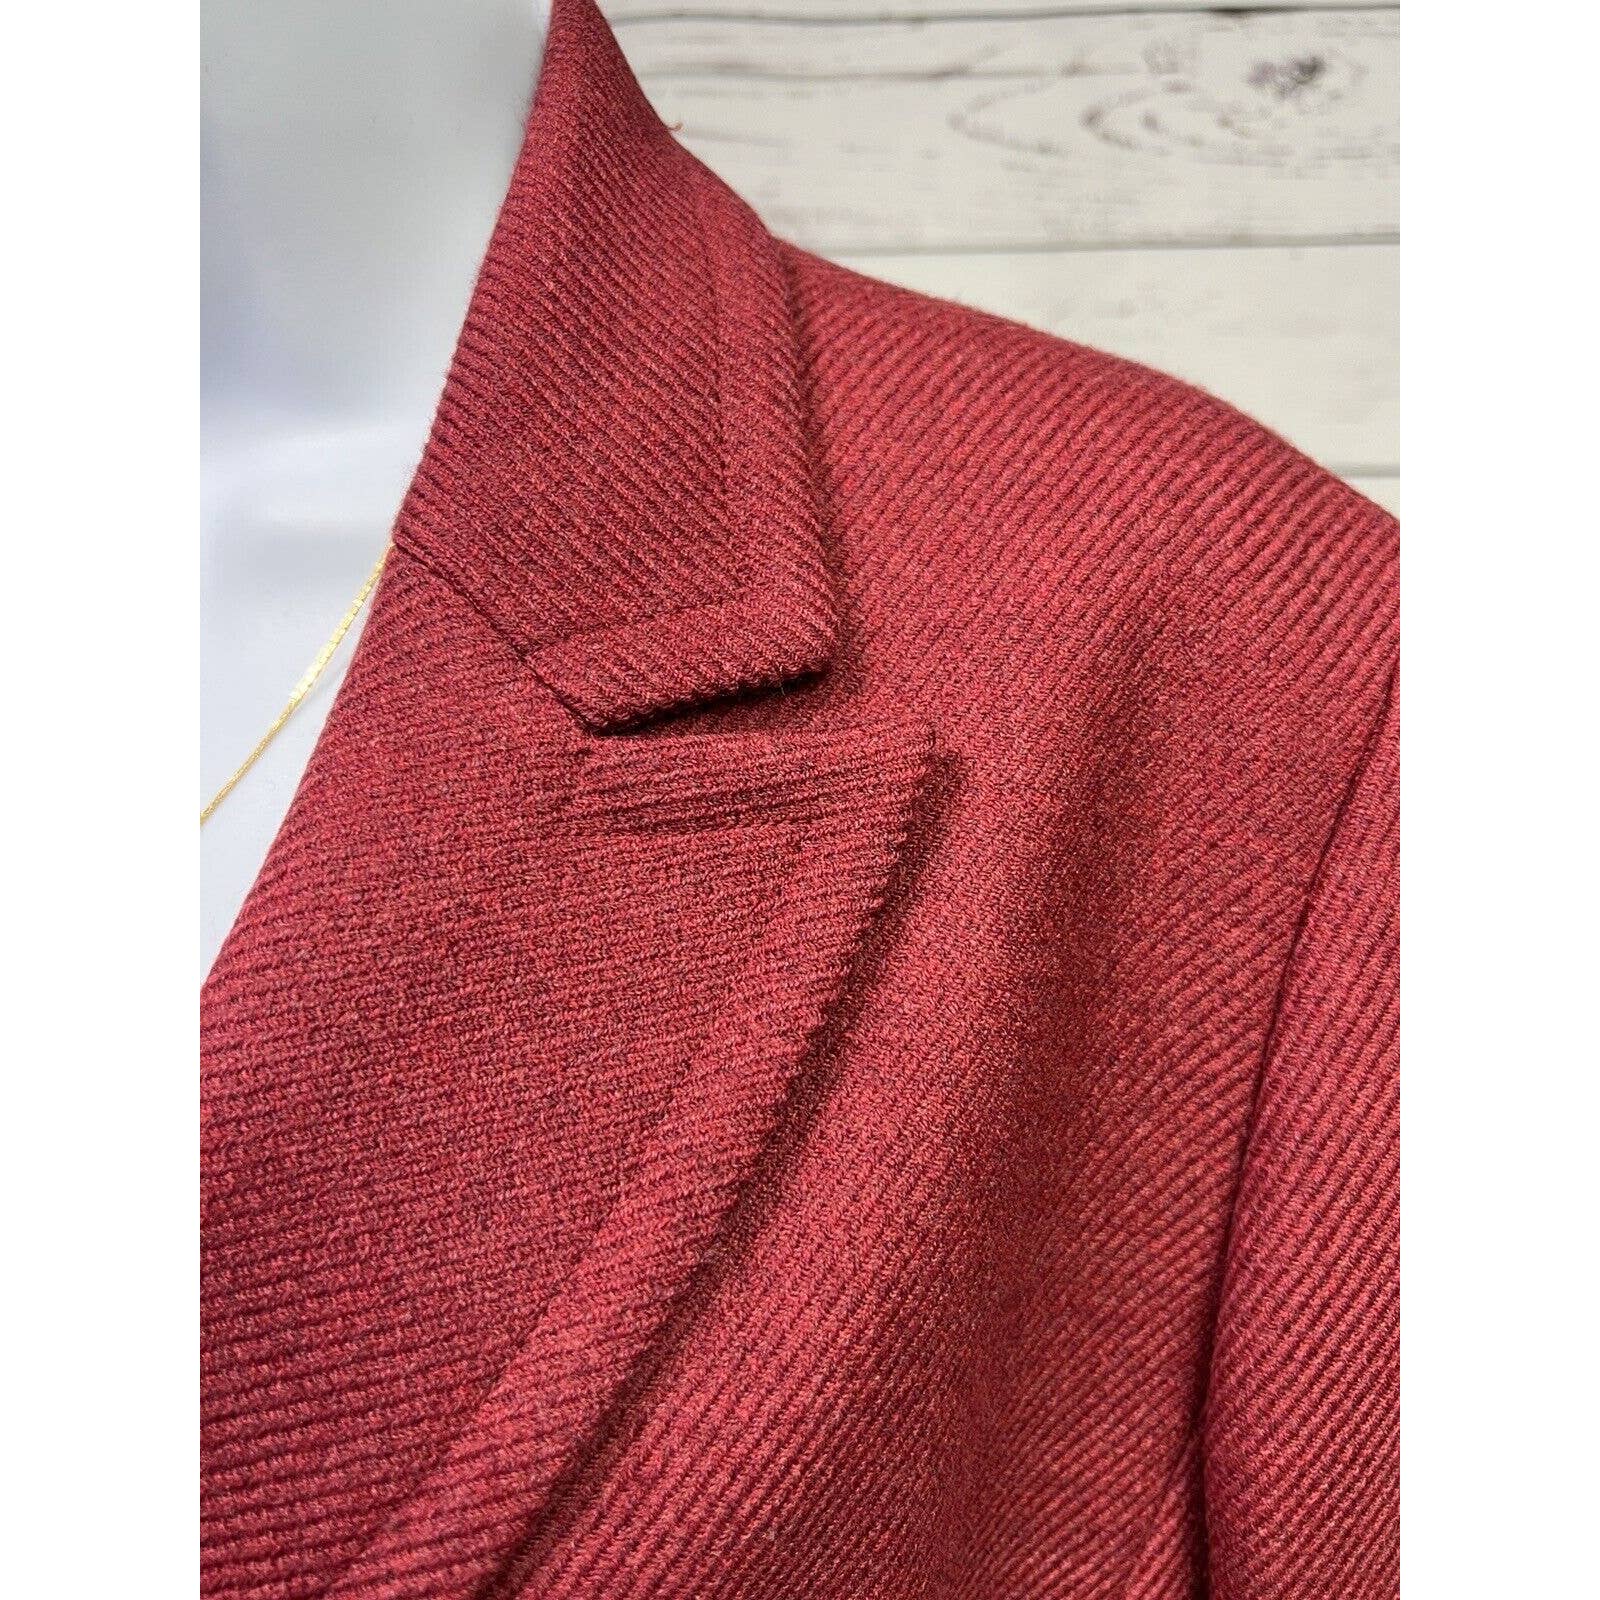 Talbots 3 Button Blazer Women’s Size 10 Cranberry Red Berry 100% Wool